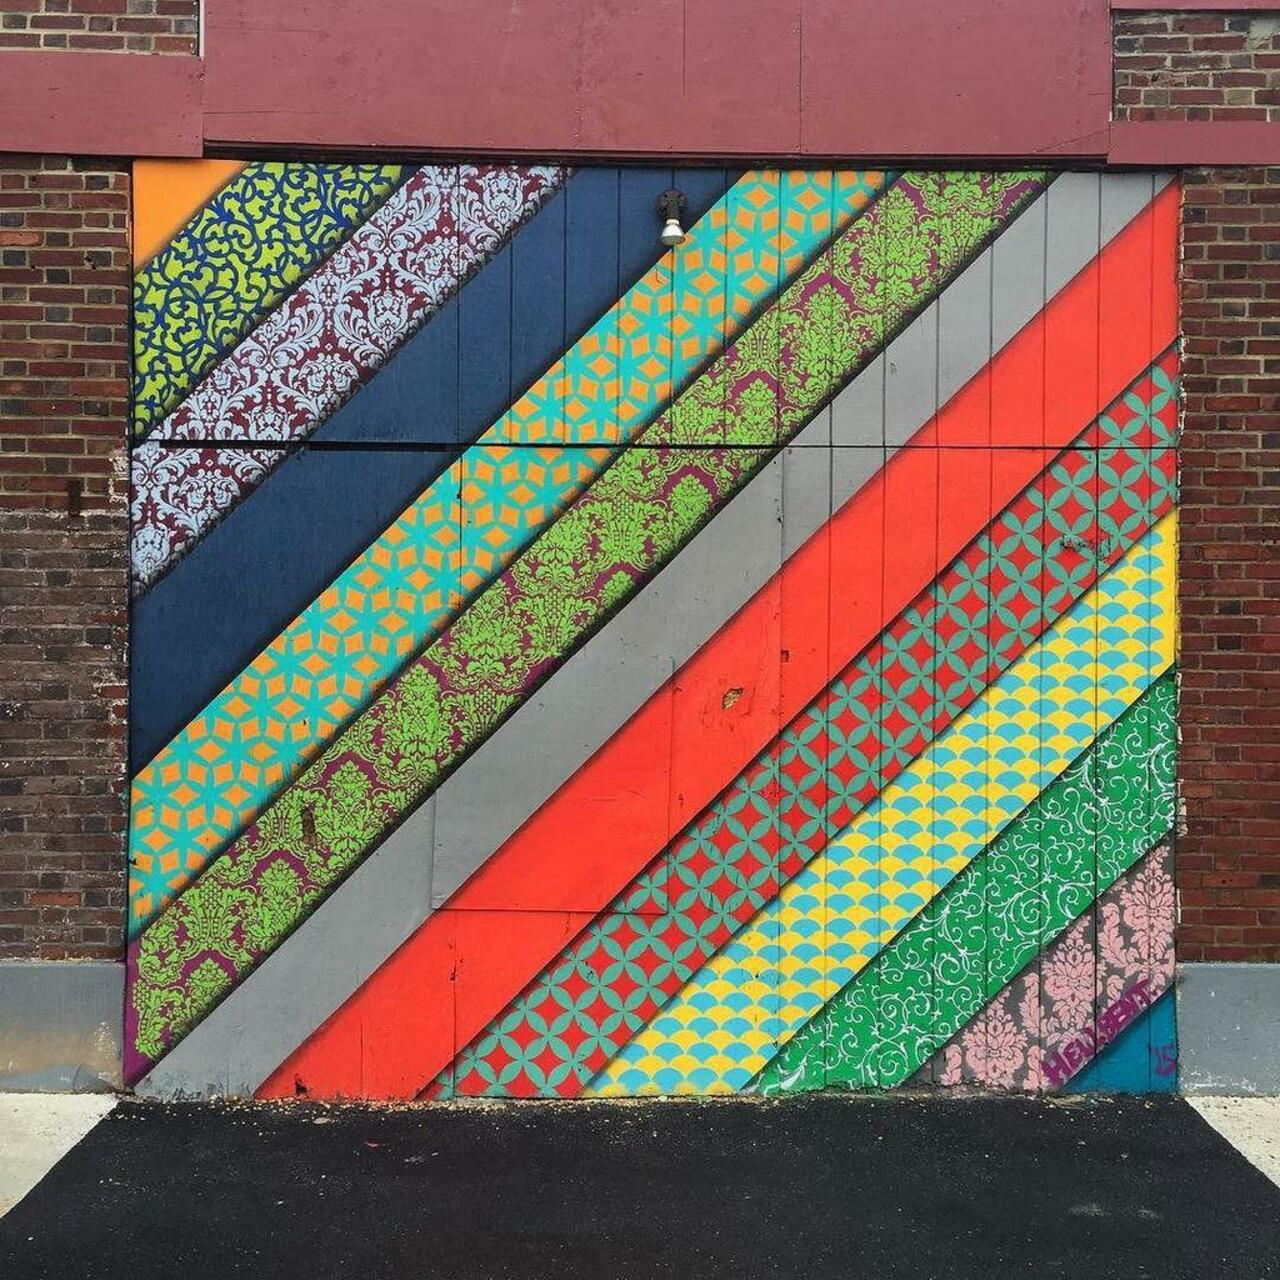 Mural Arts
Asbury Park, NJ
#graff #graffiti #graffitinj #outsider #outsiderart #street #streetart #streetartnj #nj … http://t.co/eJgskp2F5q